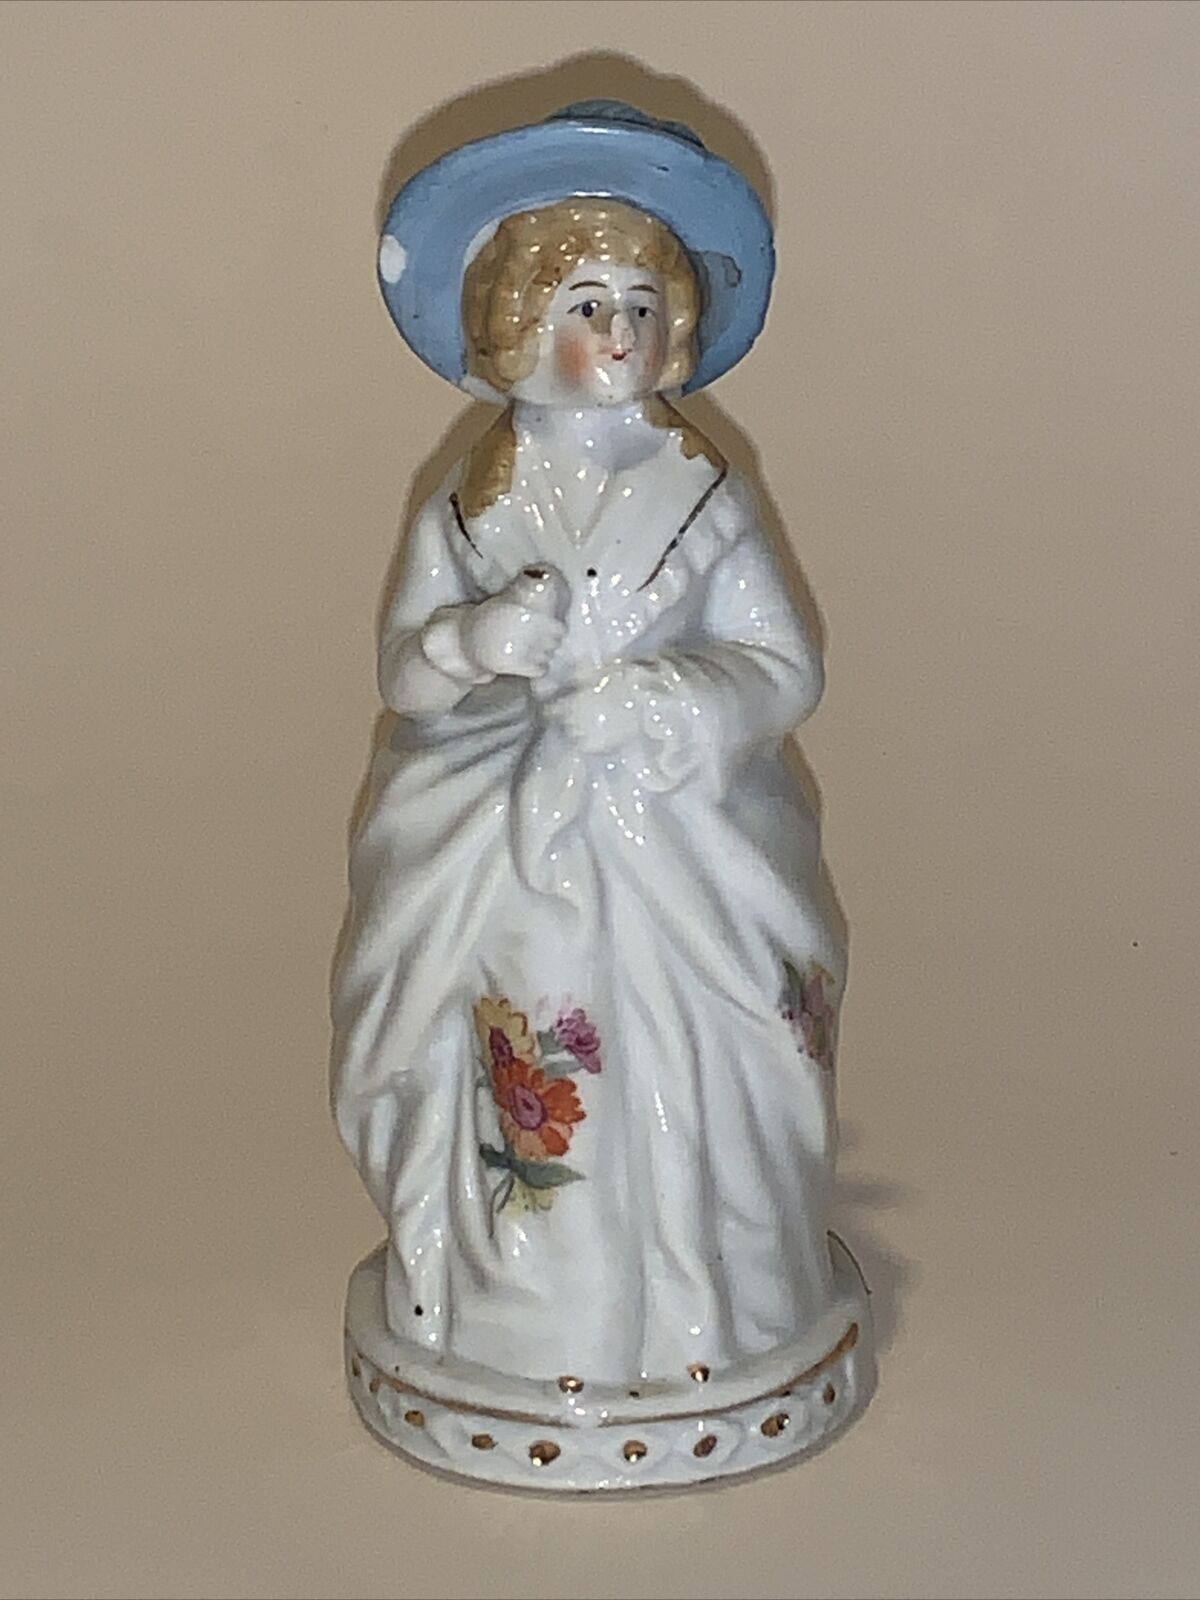 Vintage Victorian Lady Ceramic Figurine Made in Japan Blue Bonnet Flowers